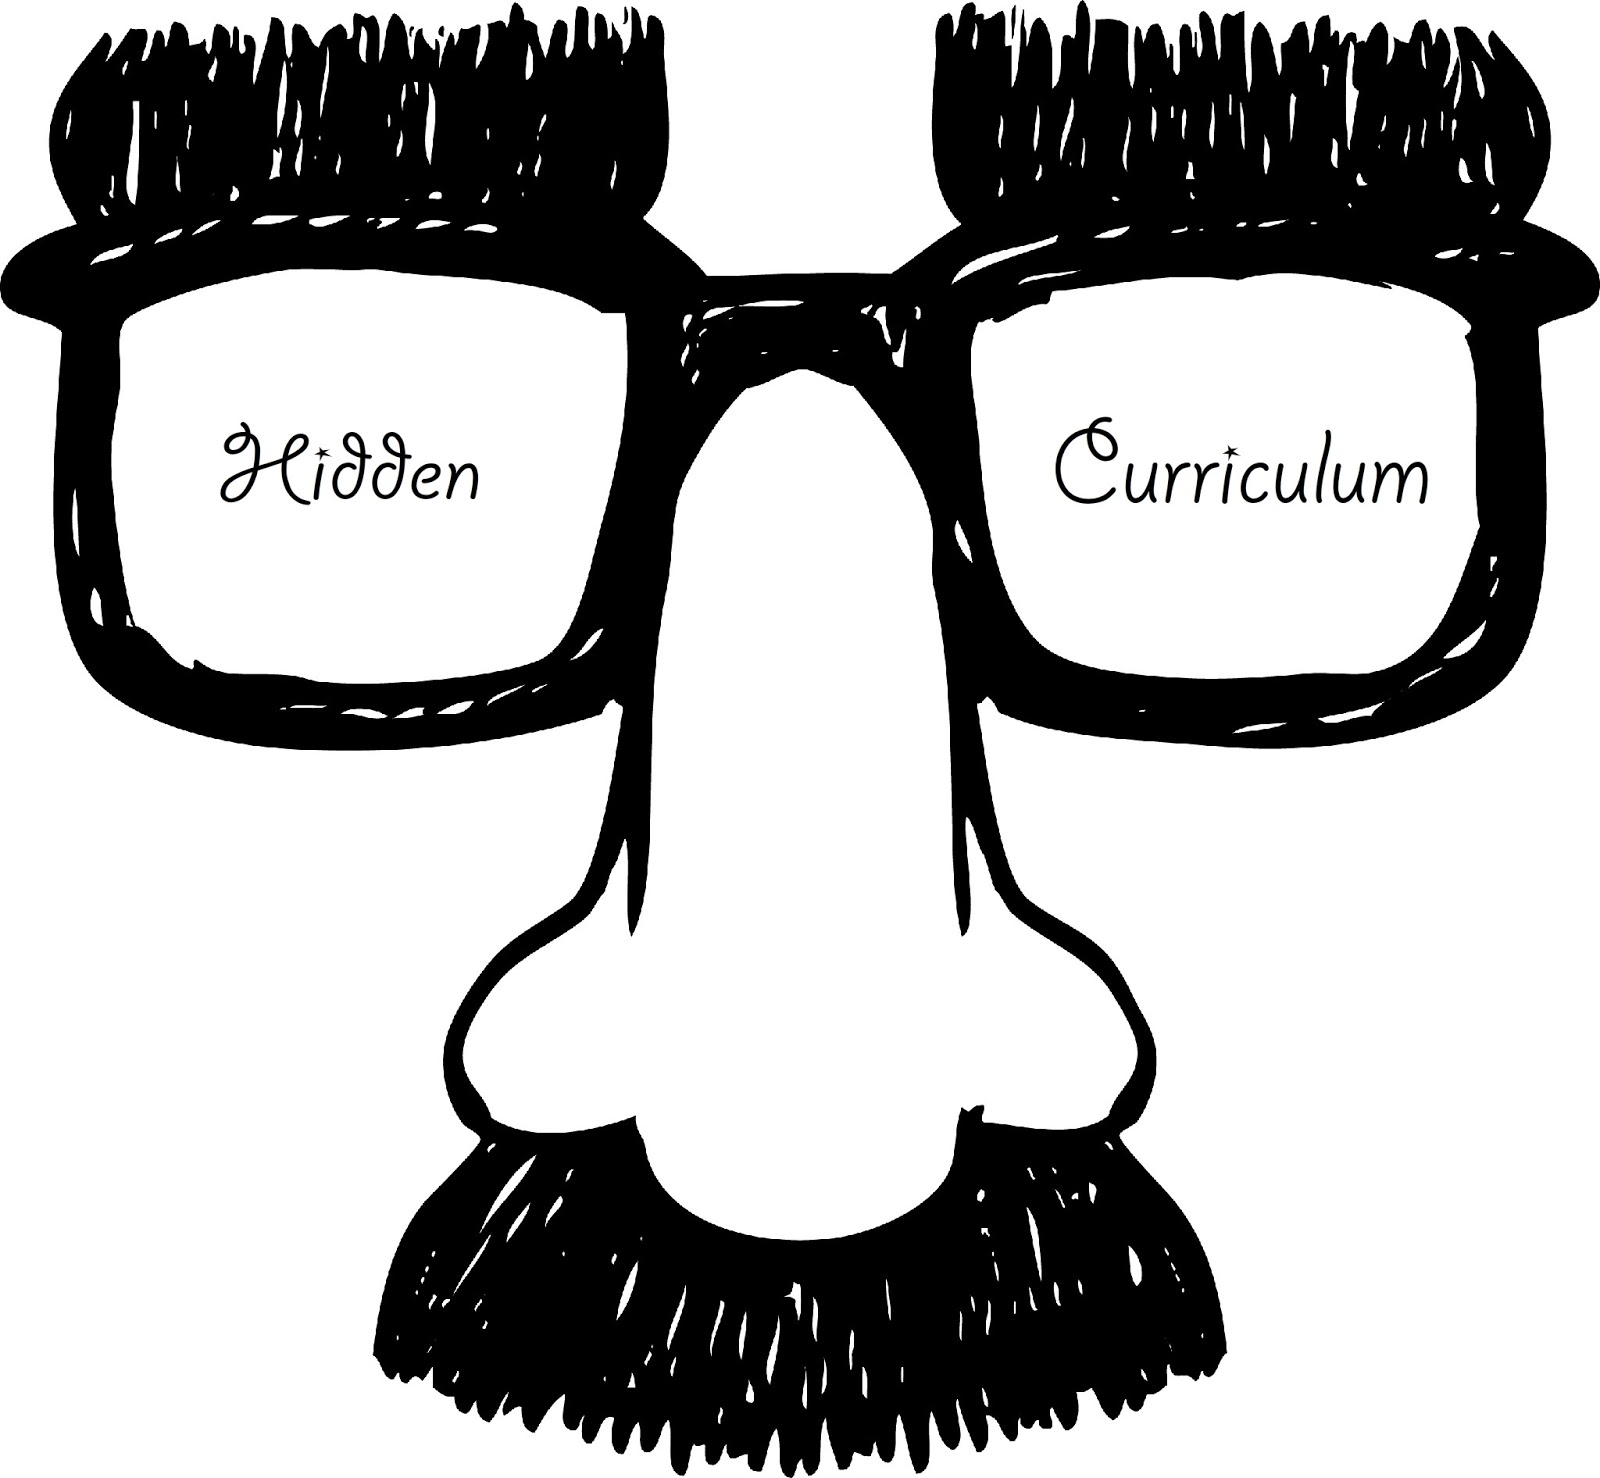 curriculum clipart hidden curriculum